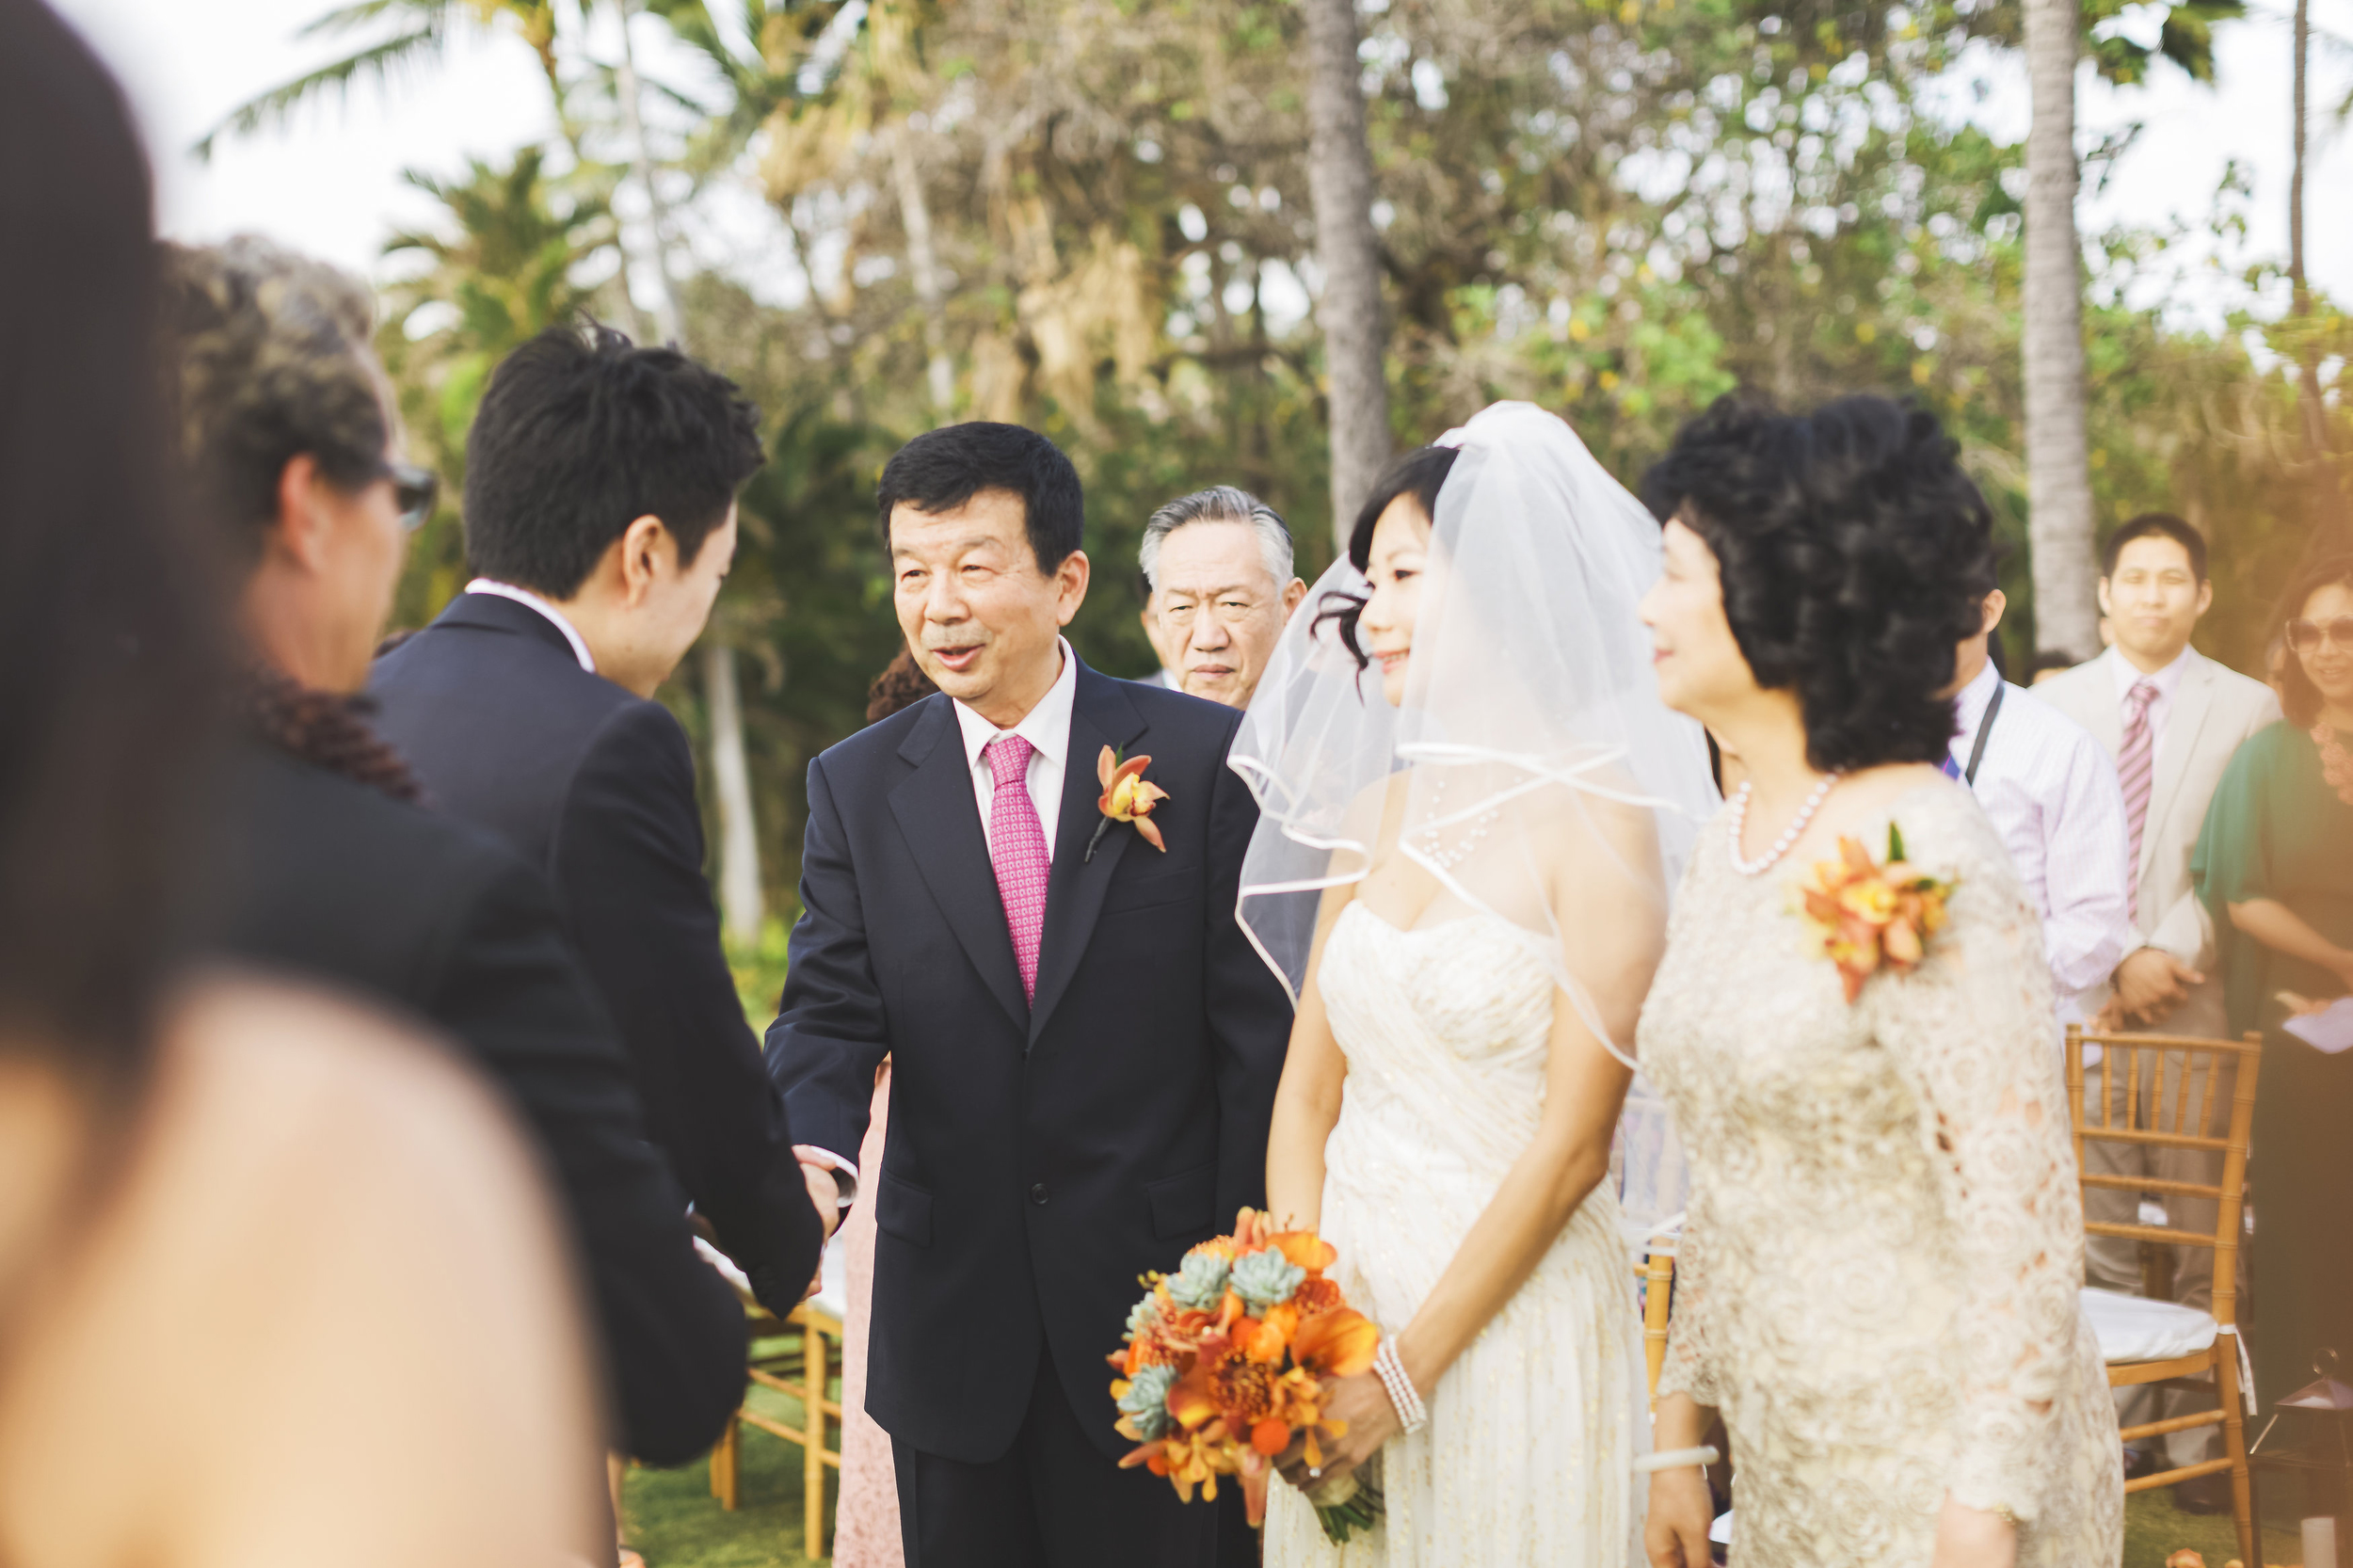 angie-diaz-photography-oahu-wedding-lanikuhonoa-shenshen-marshall-28.jpg